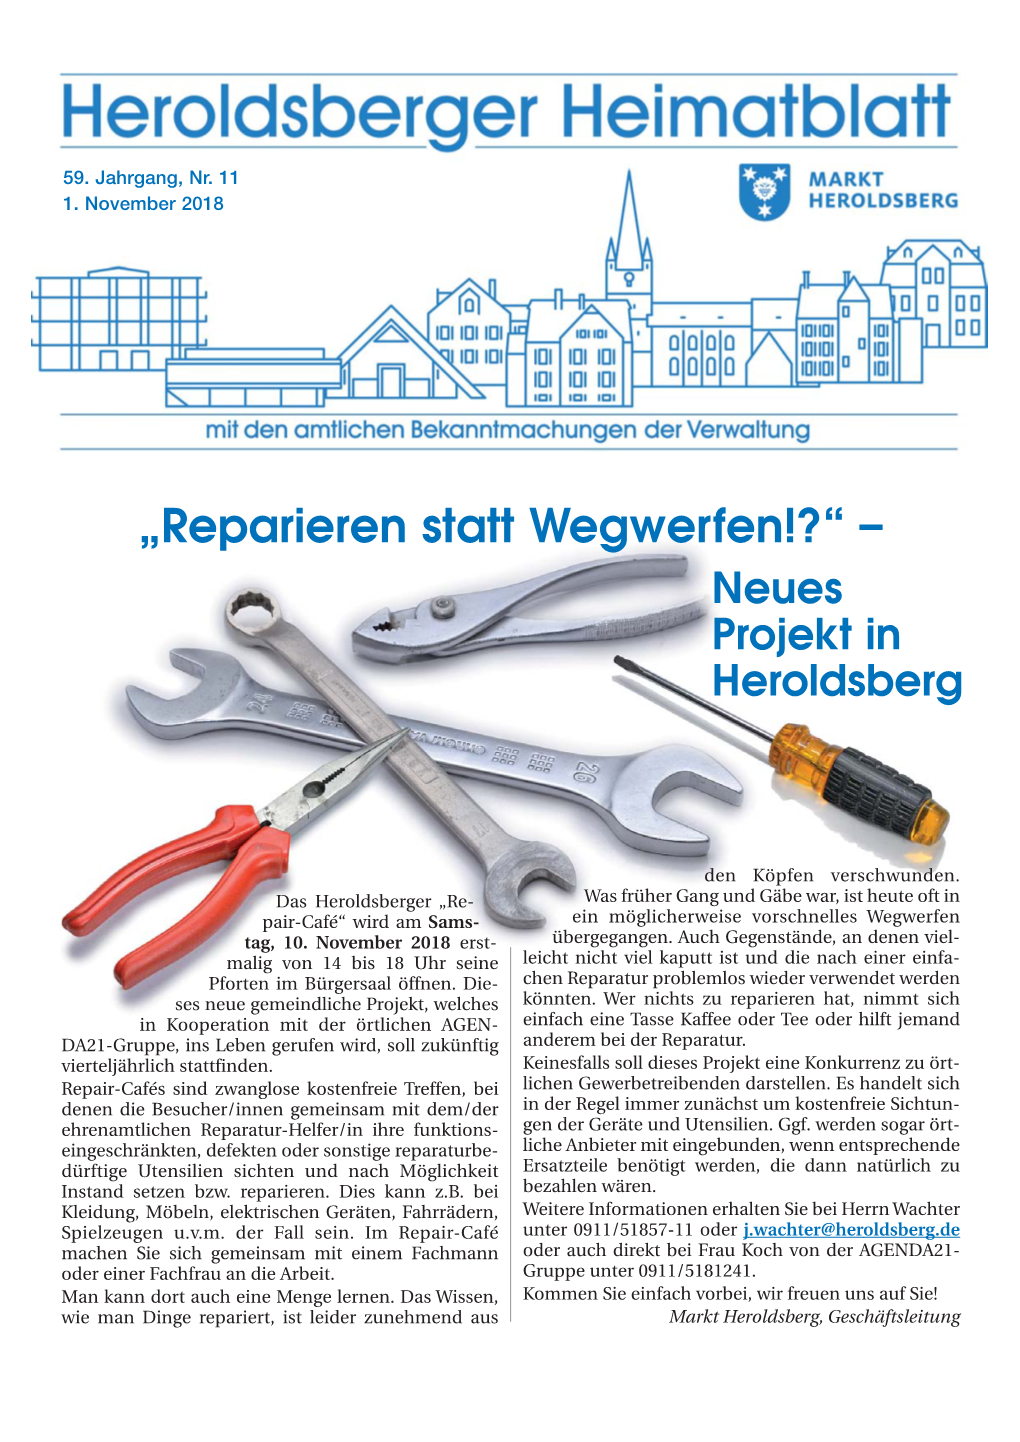 Reparieren Statt Wegwerfen!?“ – Neues Projekt in Heroldsberg